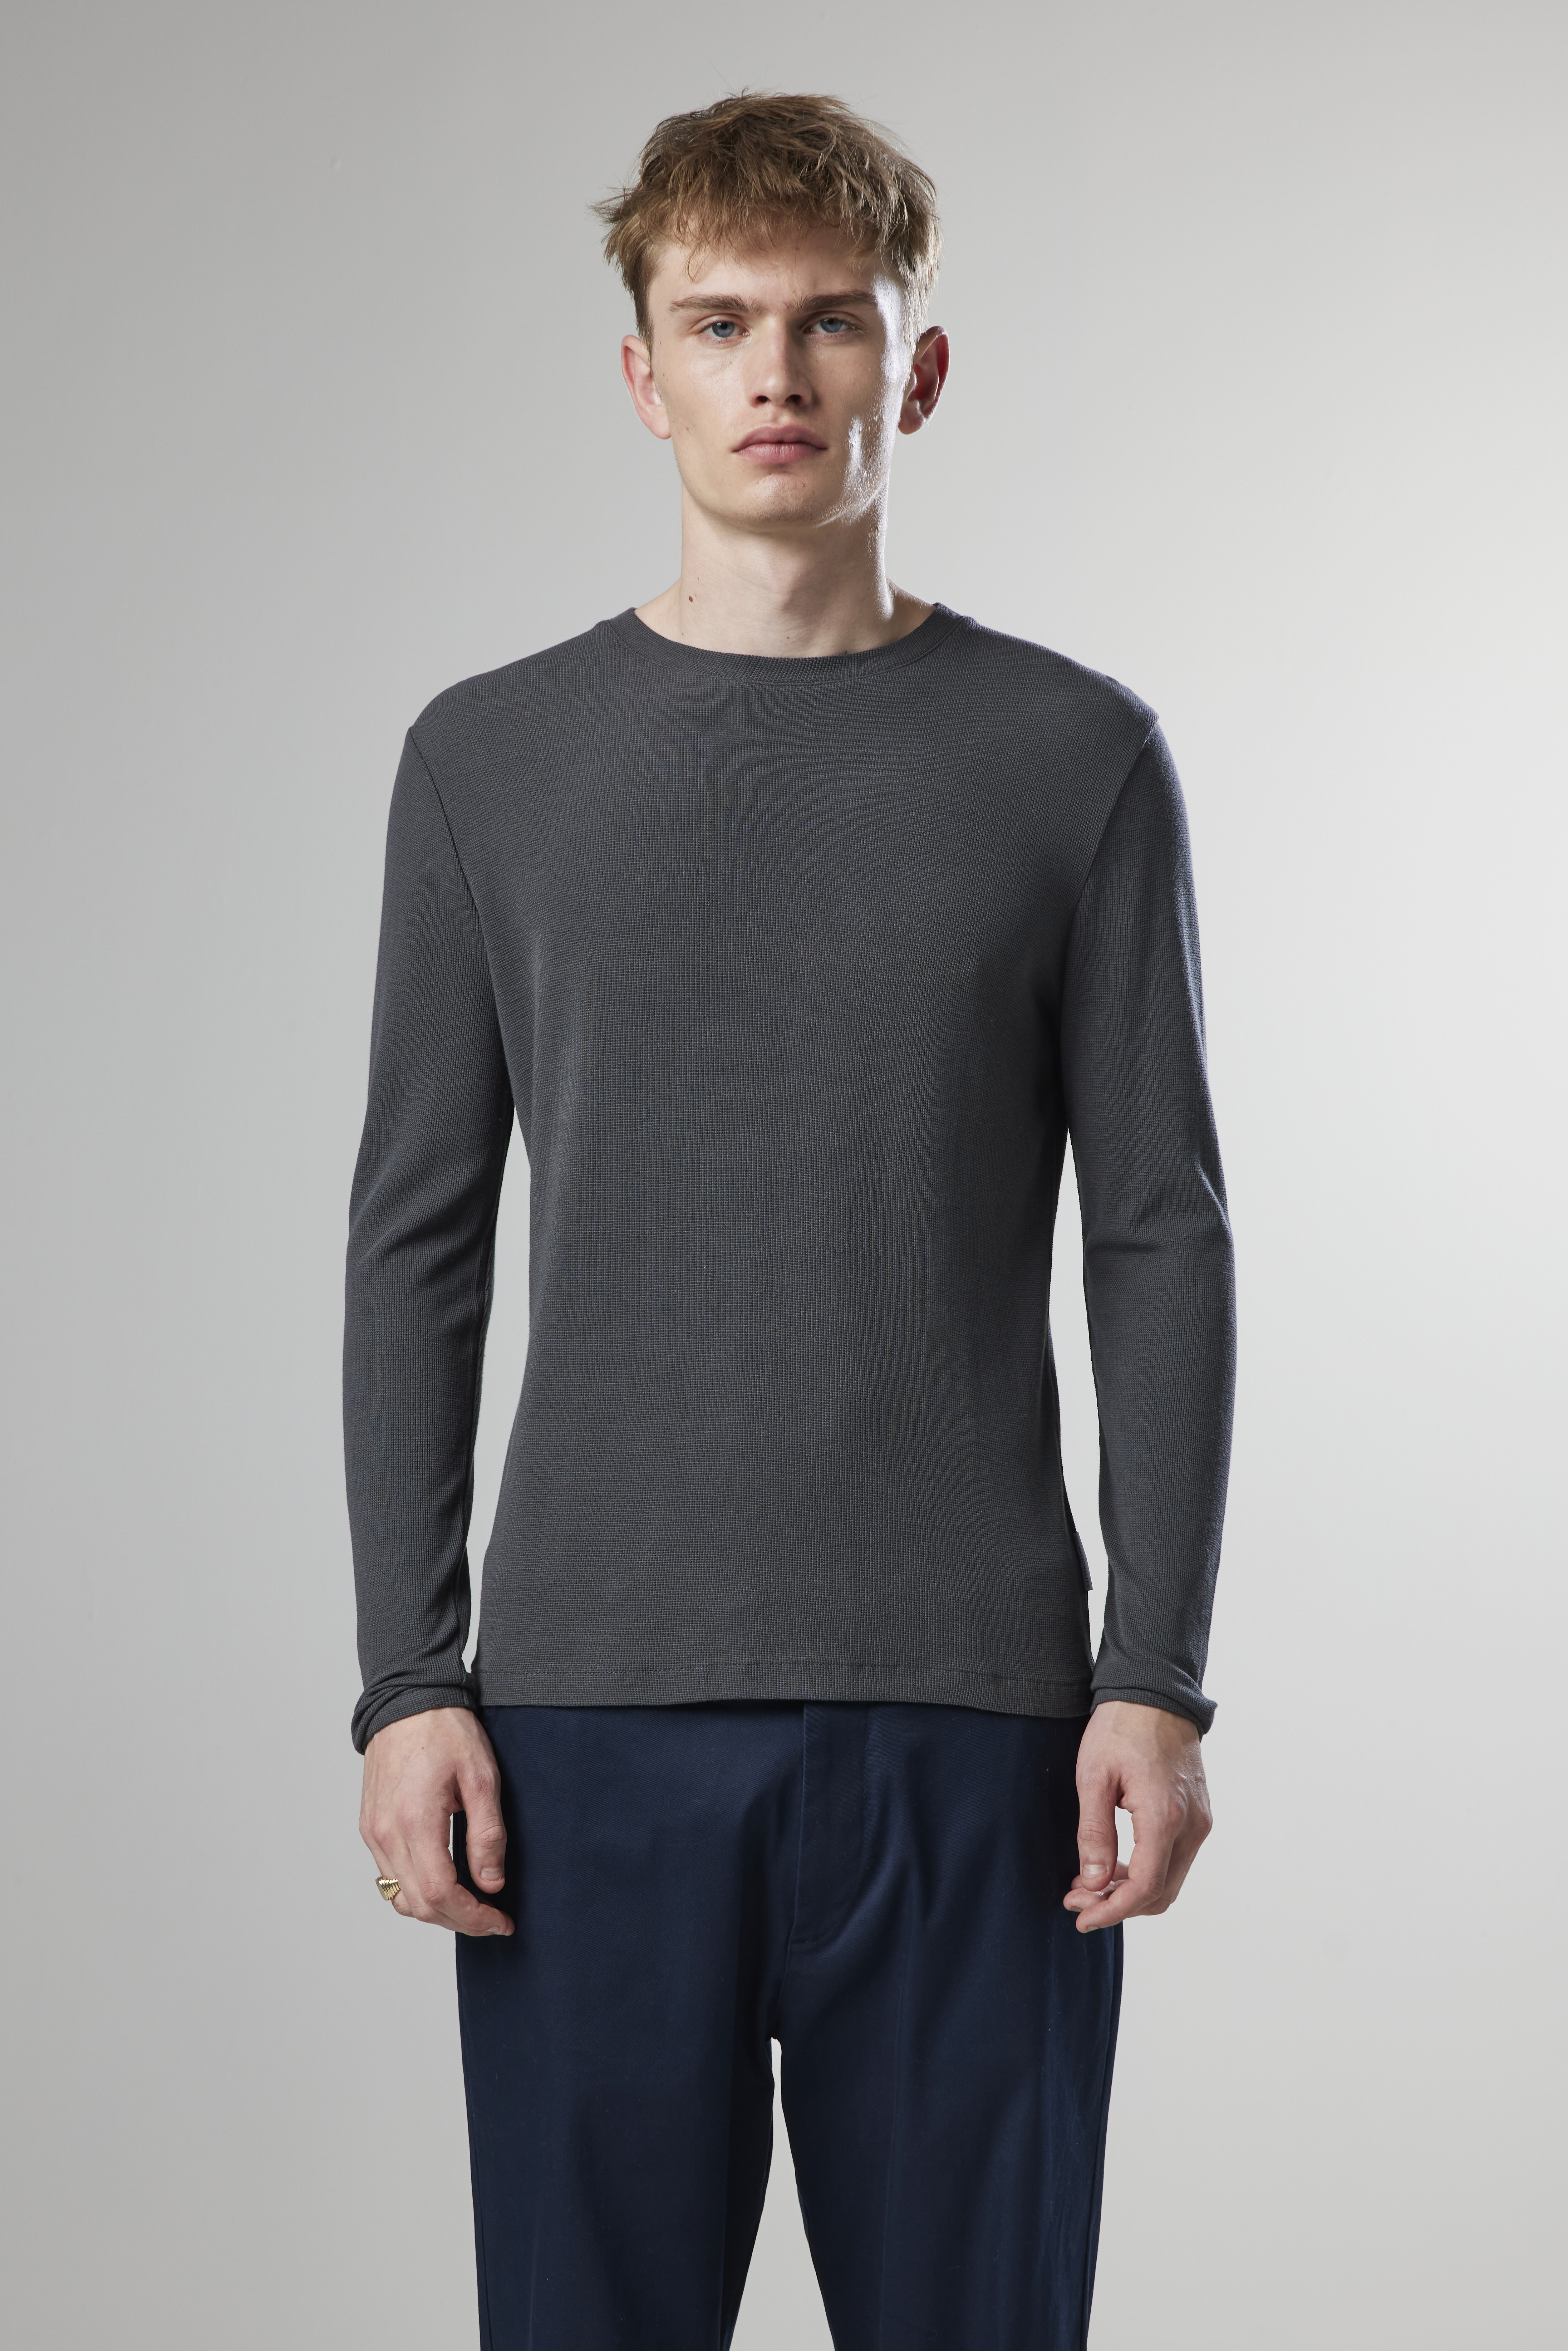 t-shirt Grey - Clive 3323 at - Buy men\'s online